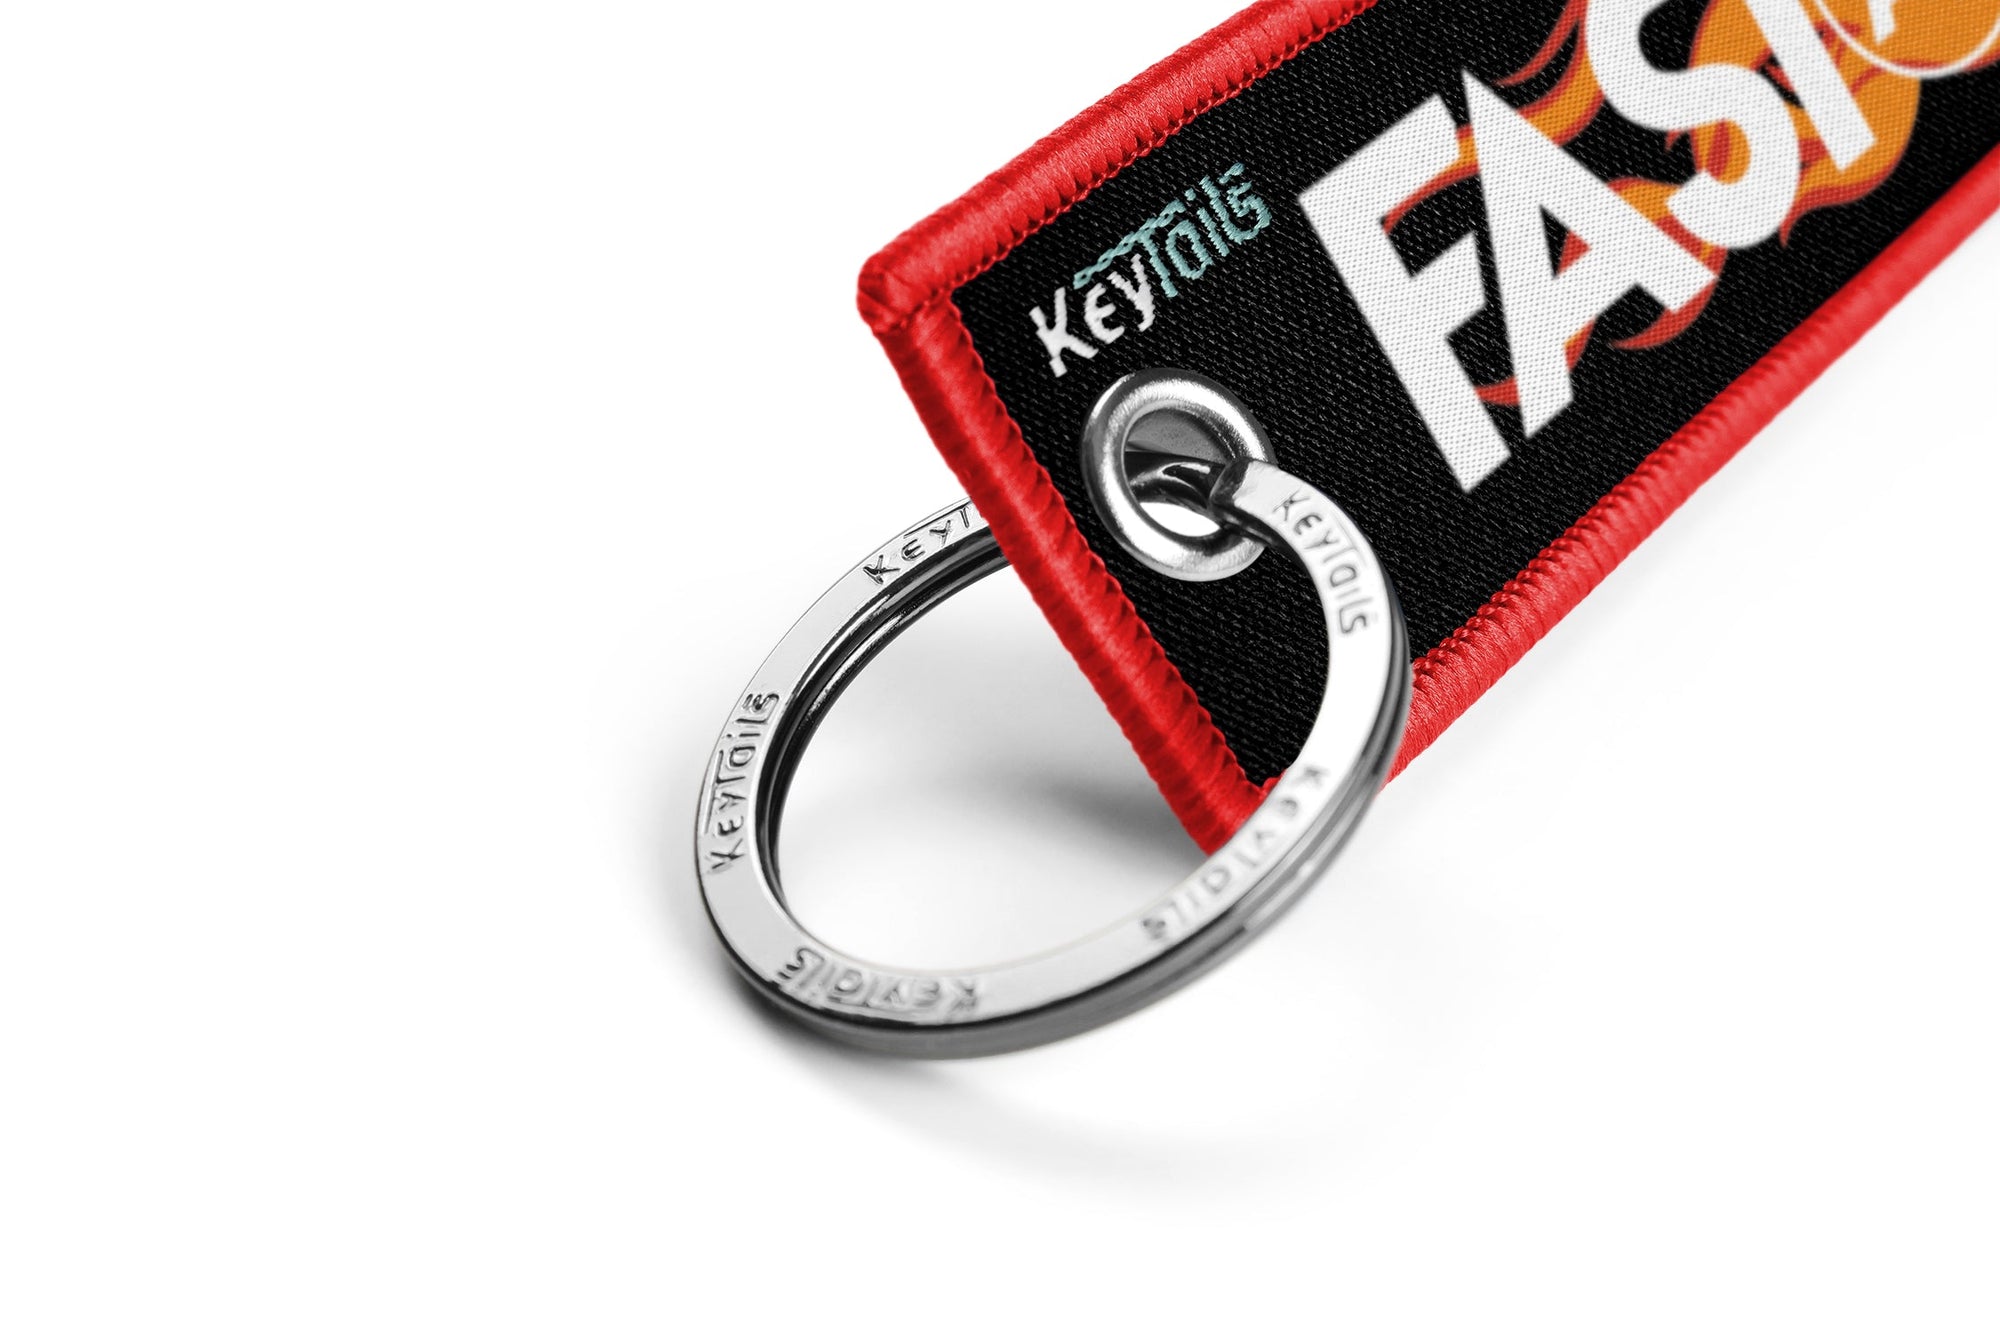 Fast As F#ck Keychain, Key Tag - Red